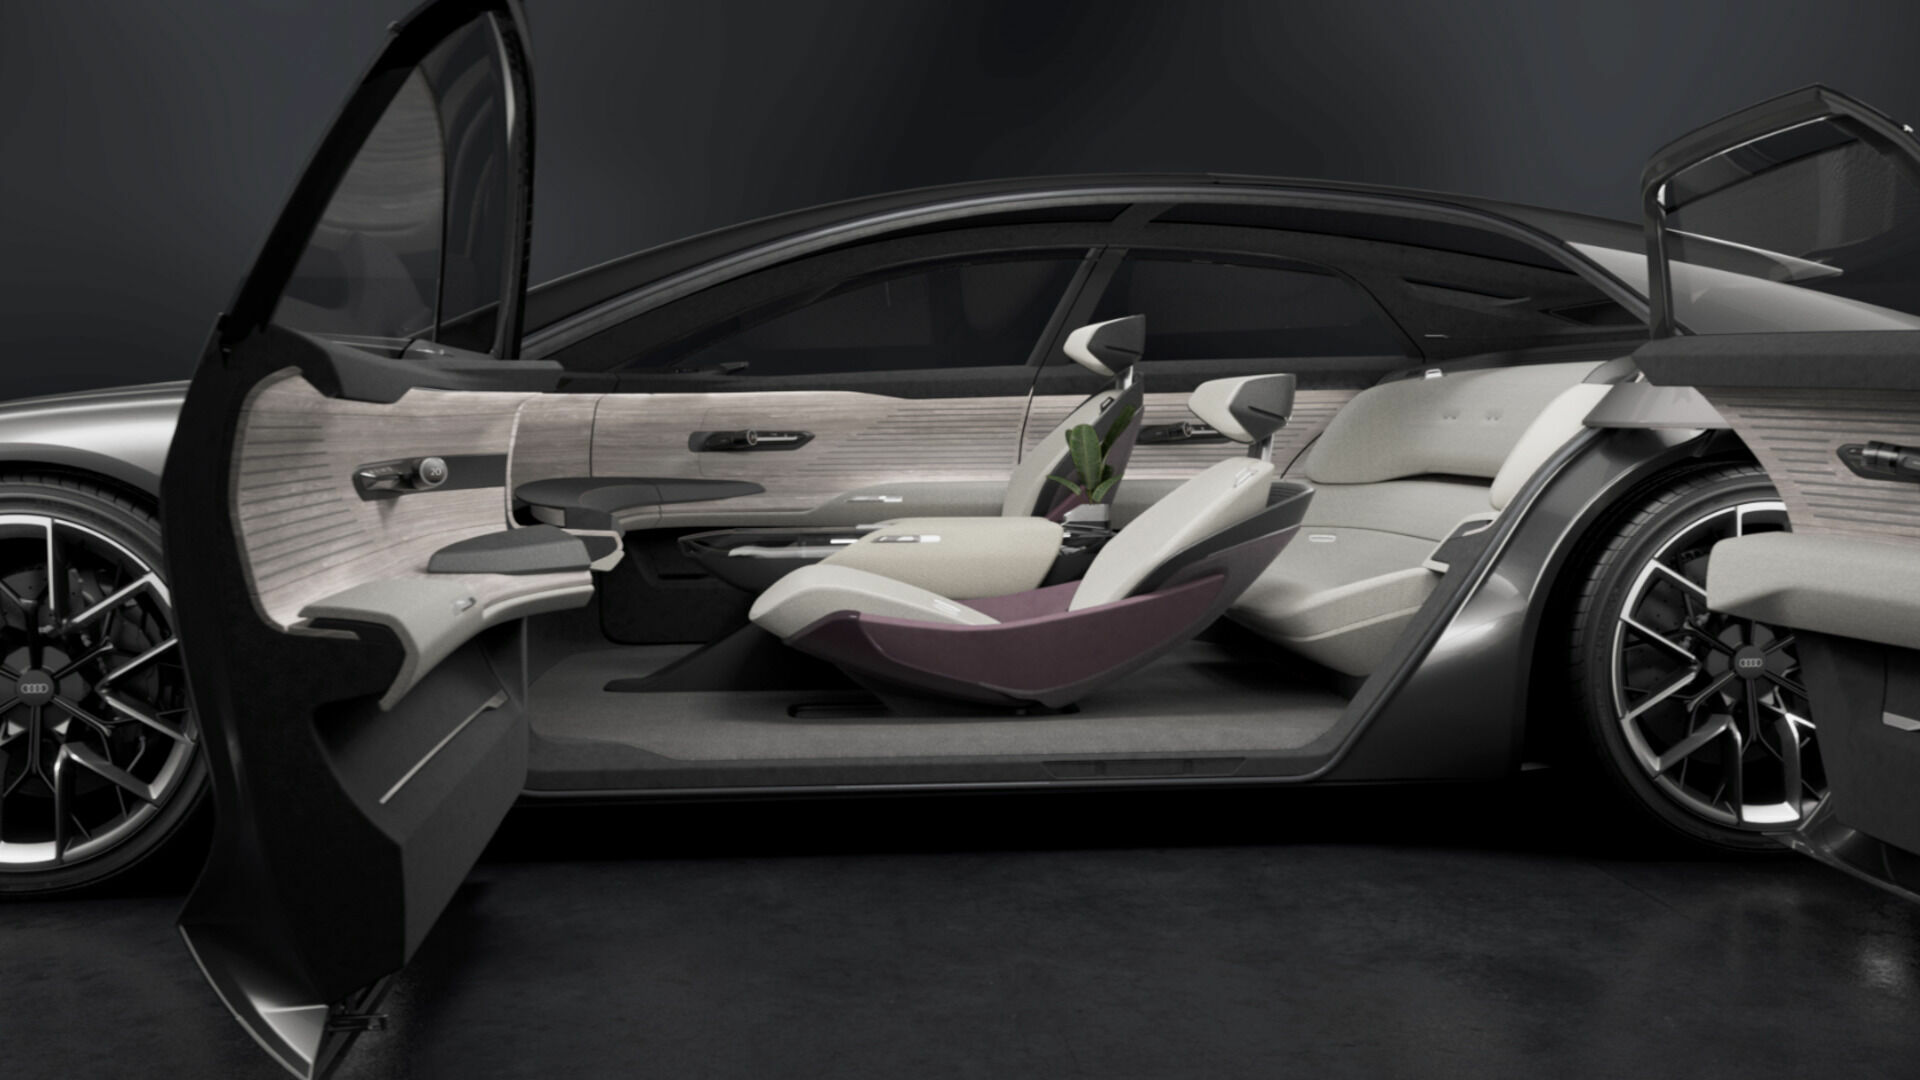 Animation: Interior Design of the Audi grandsphere concept